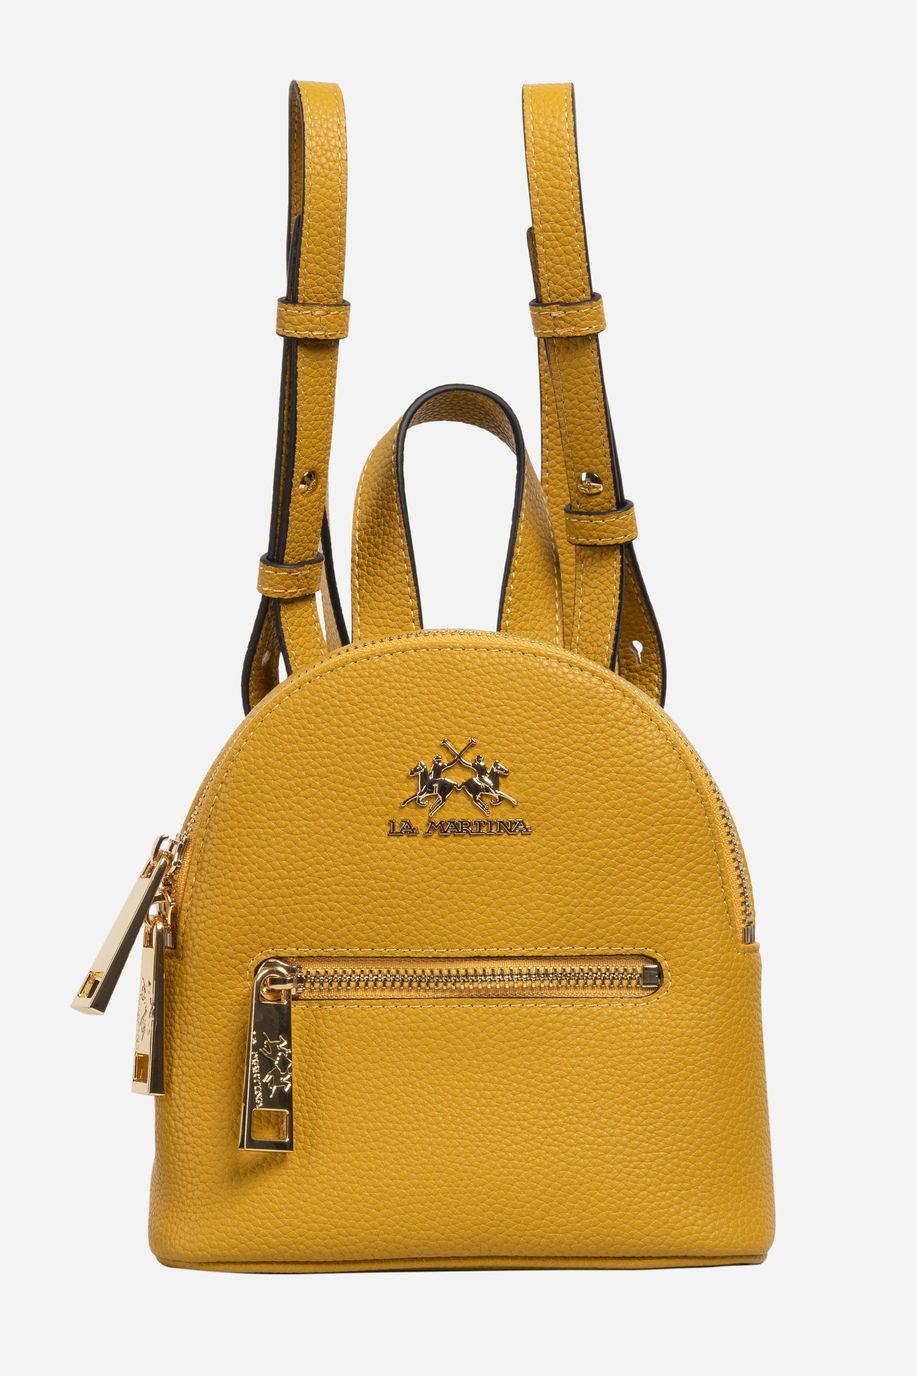 Damentasche aus Leder - Taschen | La Martina - Official Online Shop